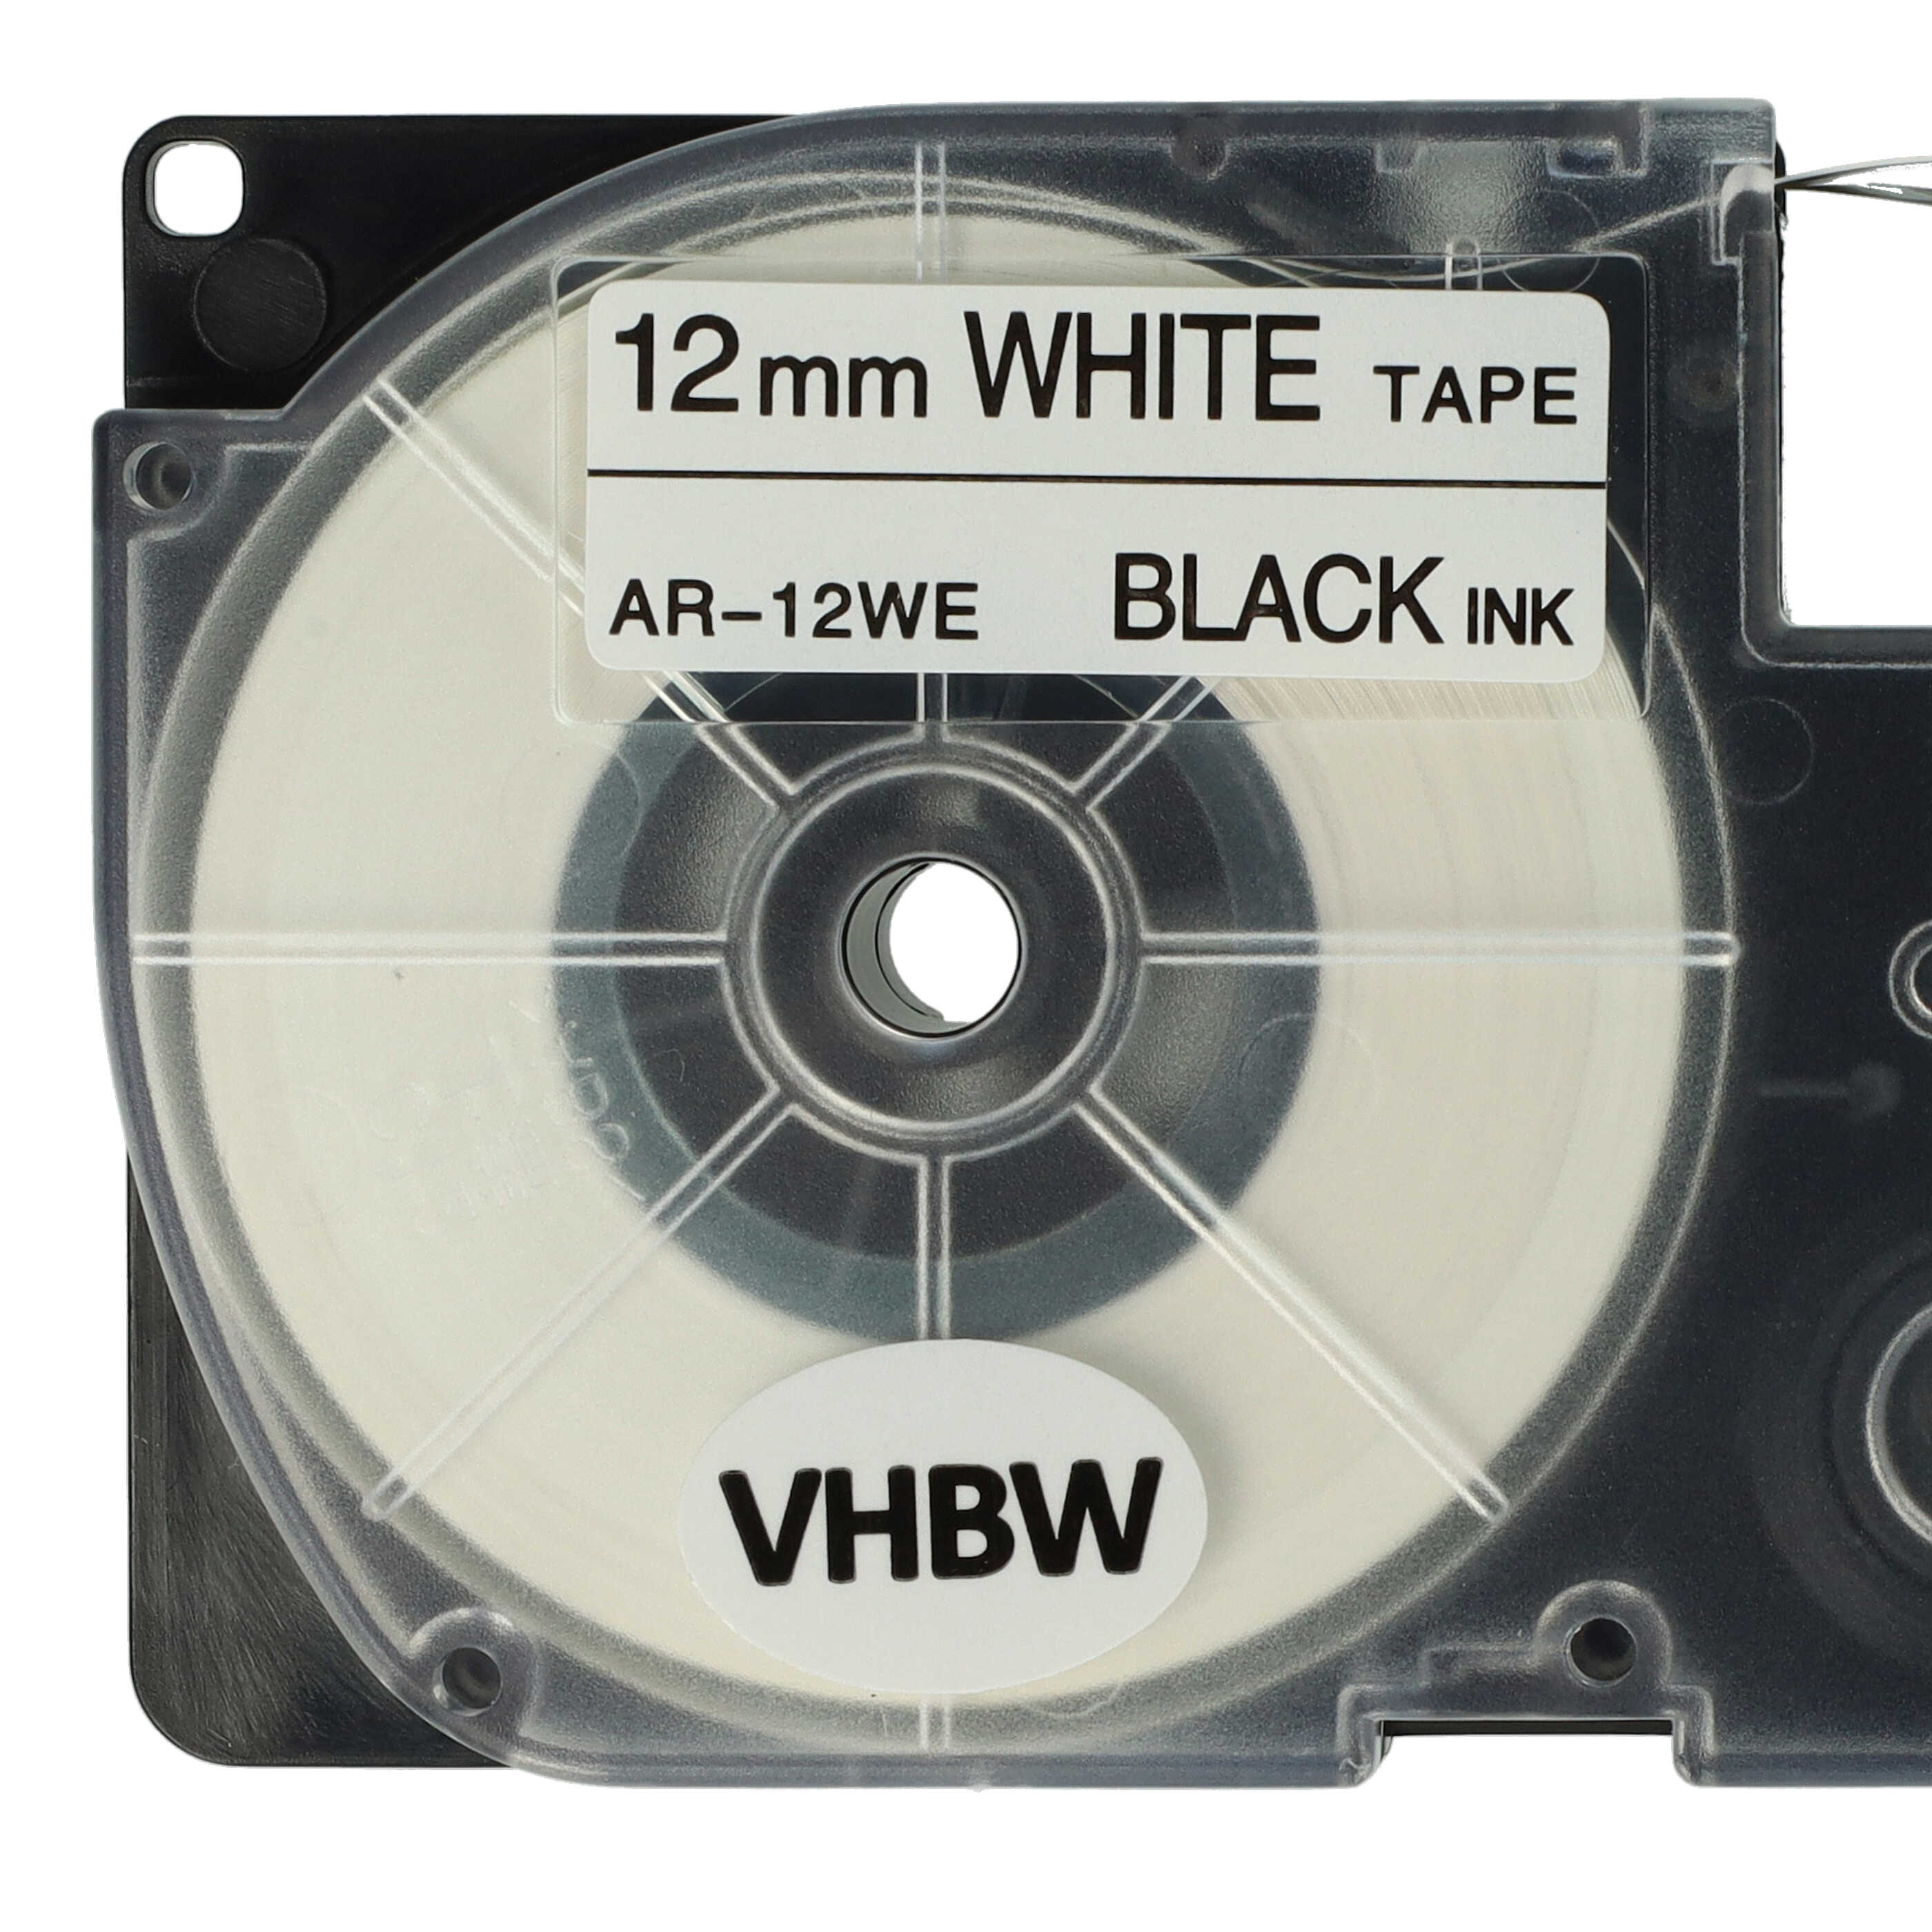 2x Casete cinta escritura reemplaza Casio XR-12WE, XR-12WE1 Negro su Blanco